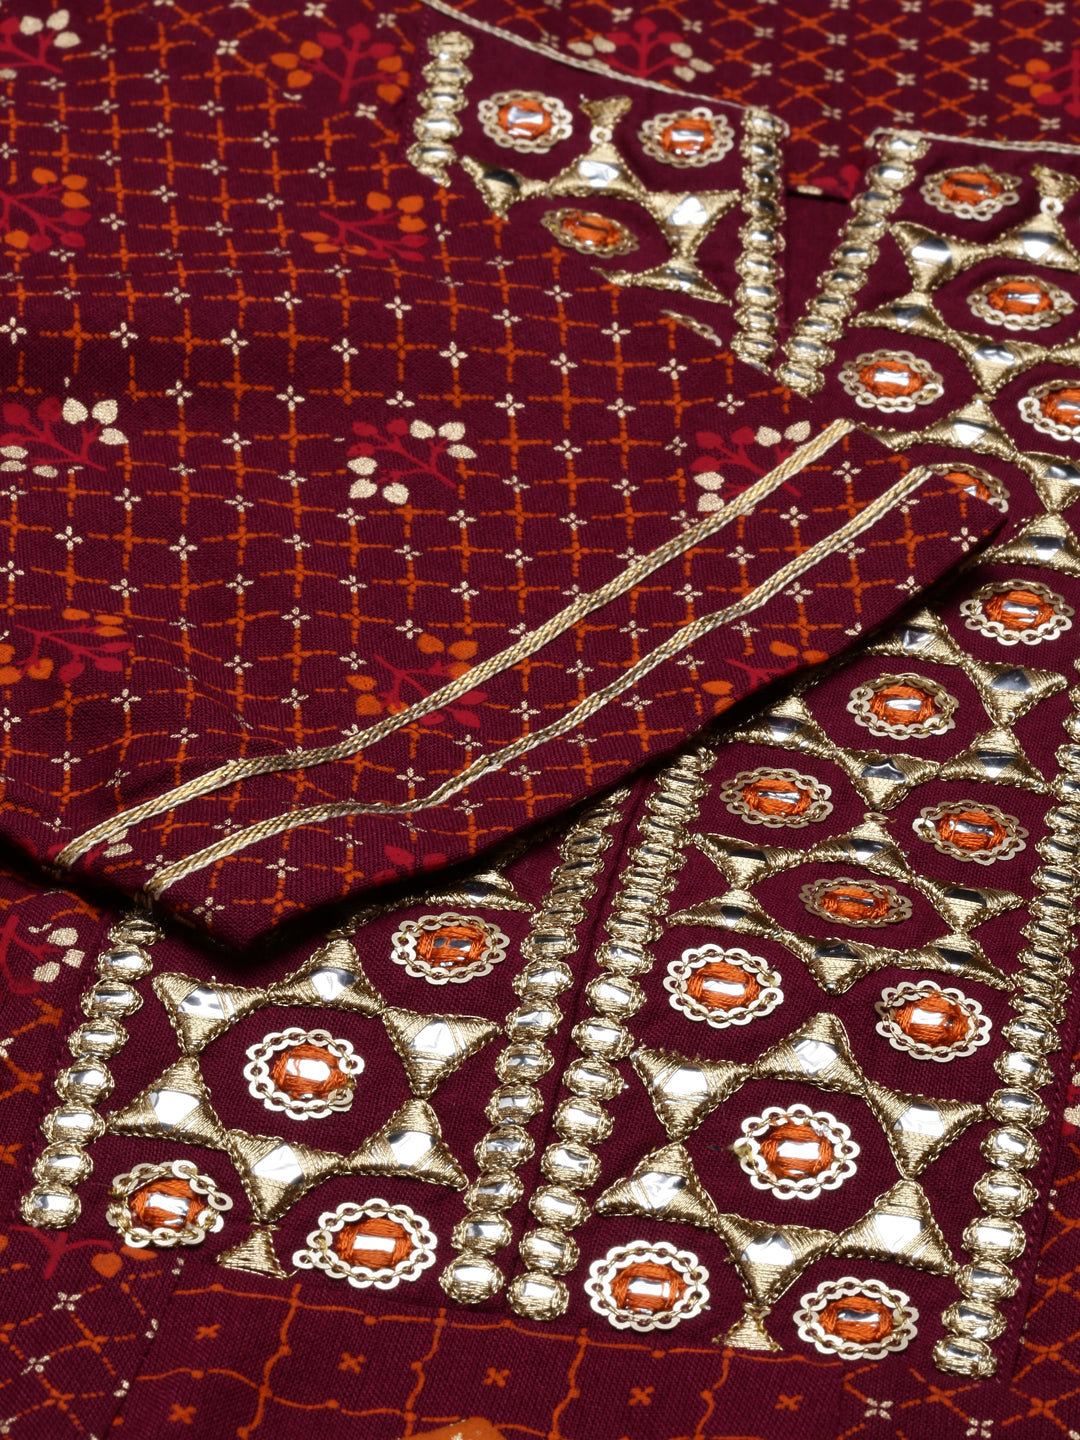 Neeru'S Maroon Color, Slub Riyon Fabric Tunic